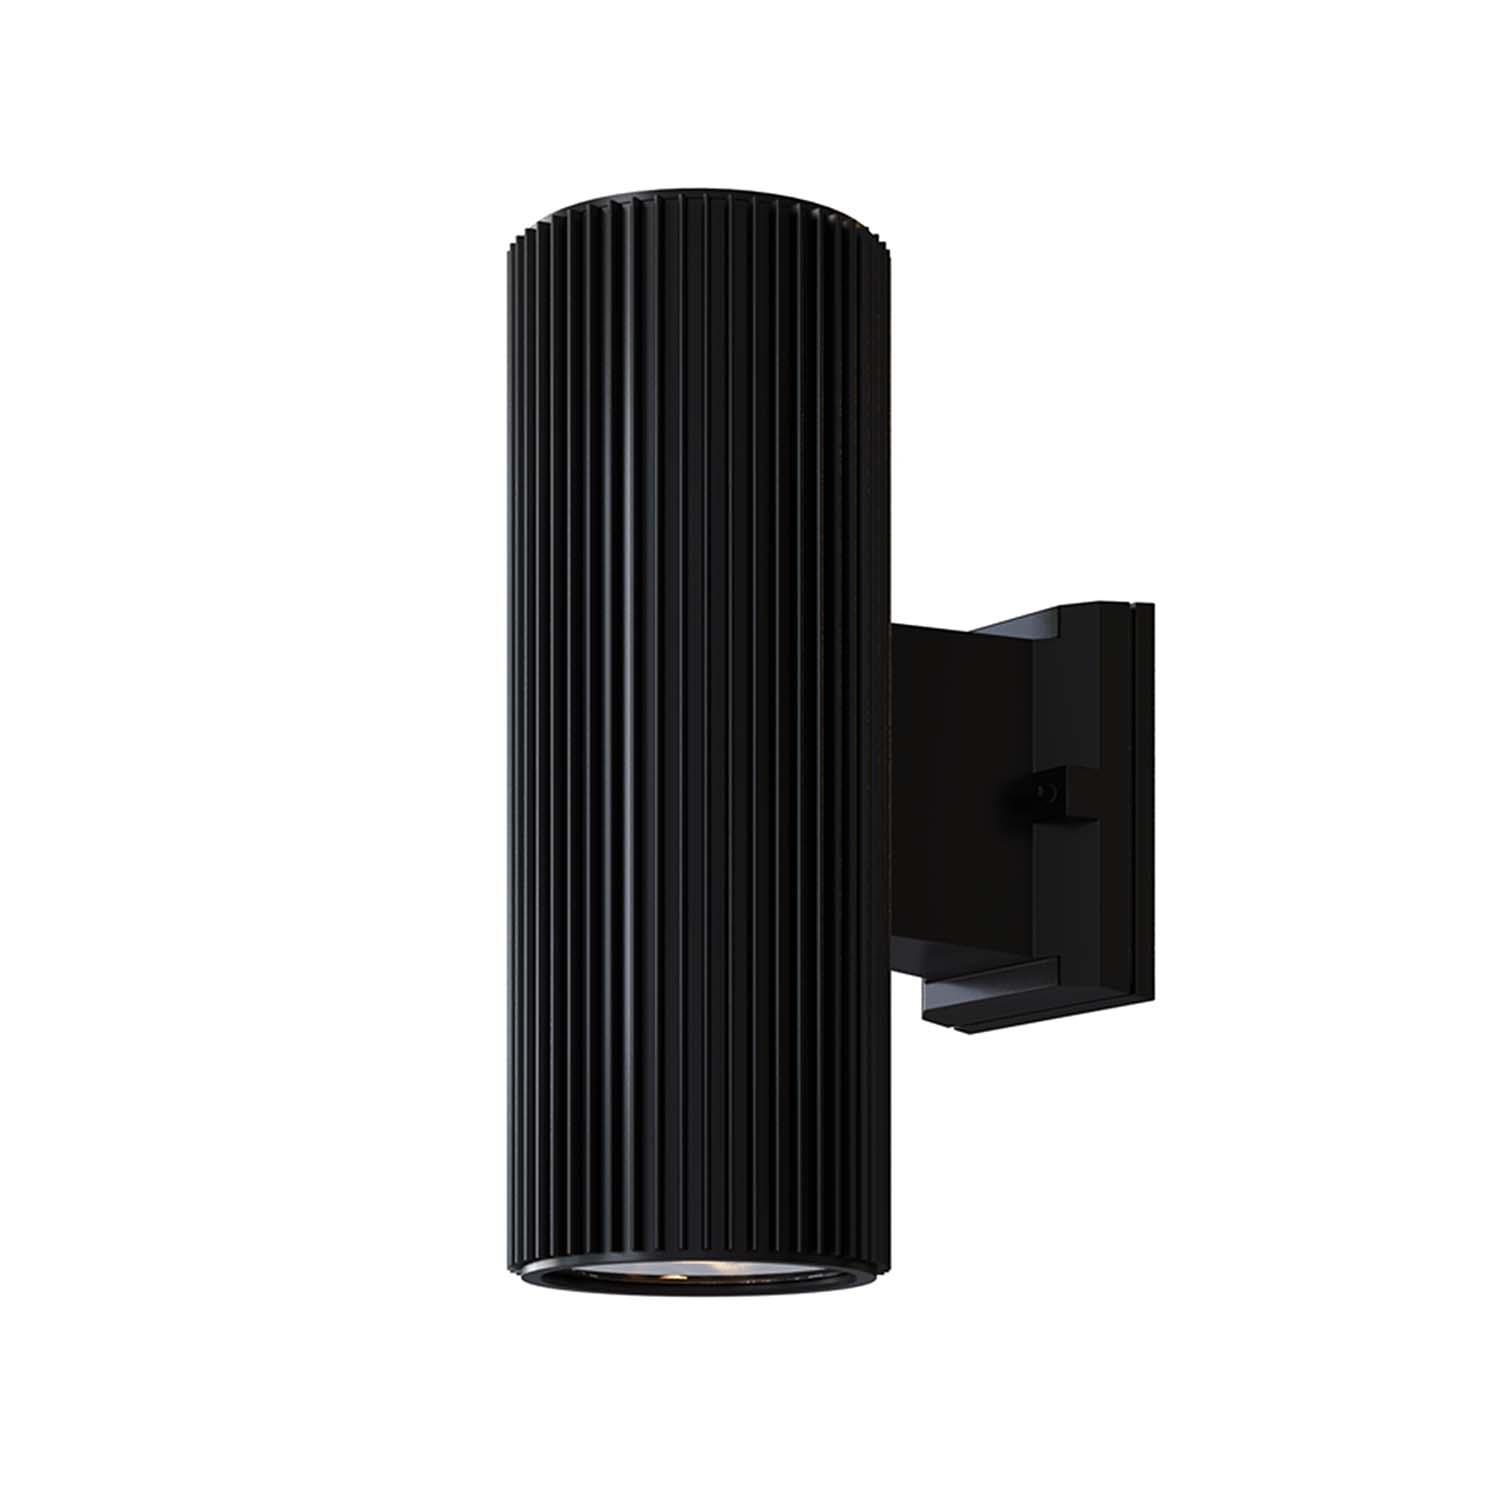 RANDO - Waterproof designer wall light, black, white or gray